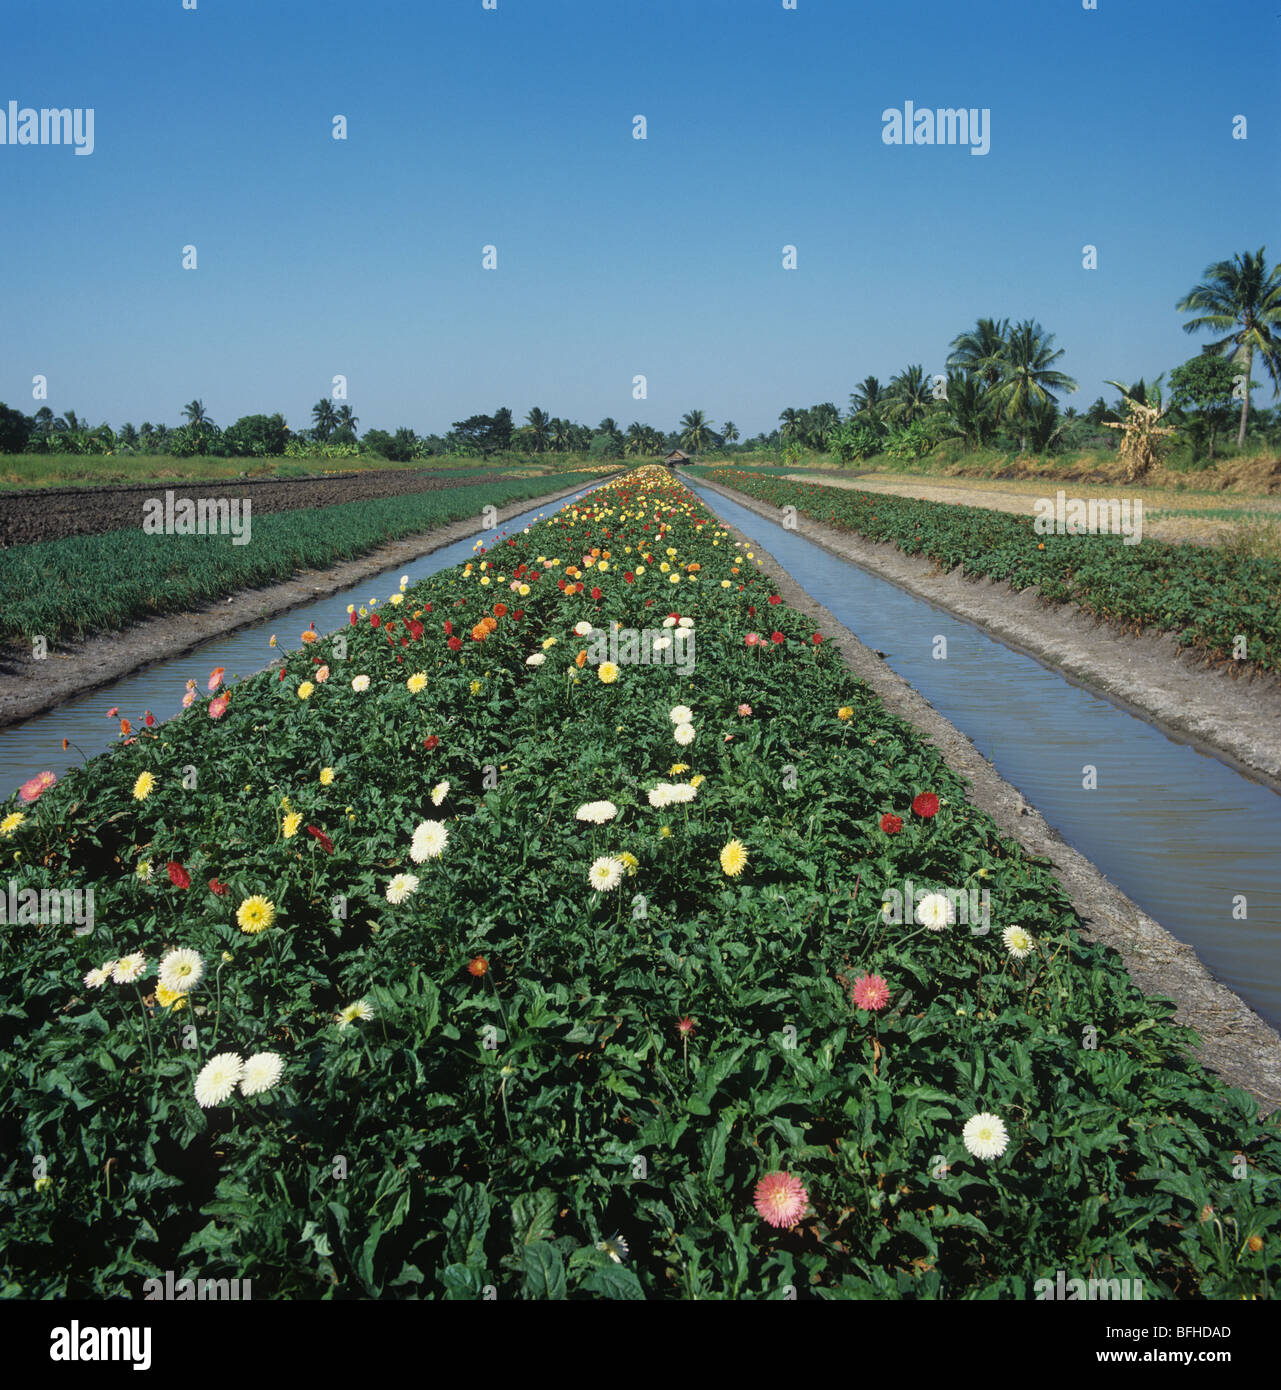 Gerbera fleurs culture sur billons entre les canaux d'irrigation, Bangkok, Thaïlande Banque D'Images